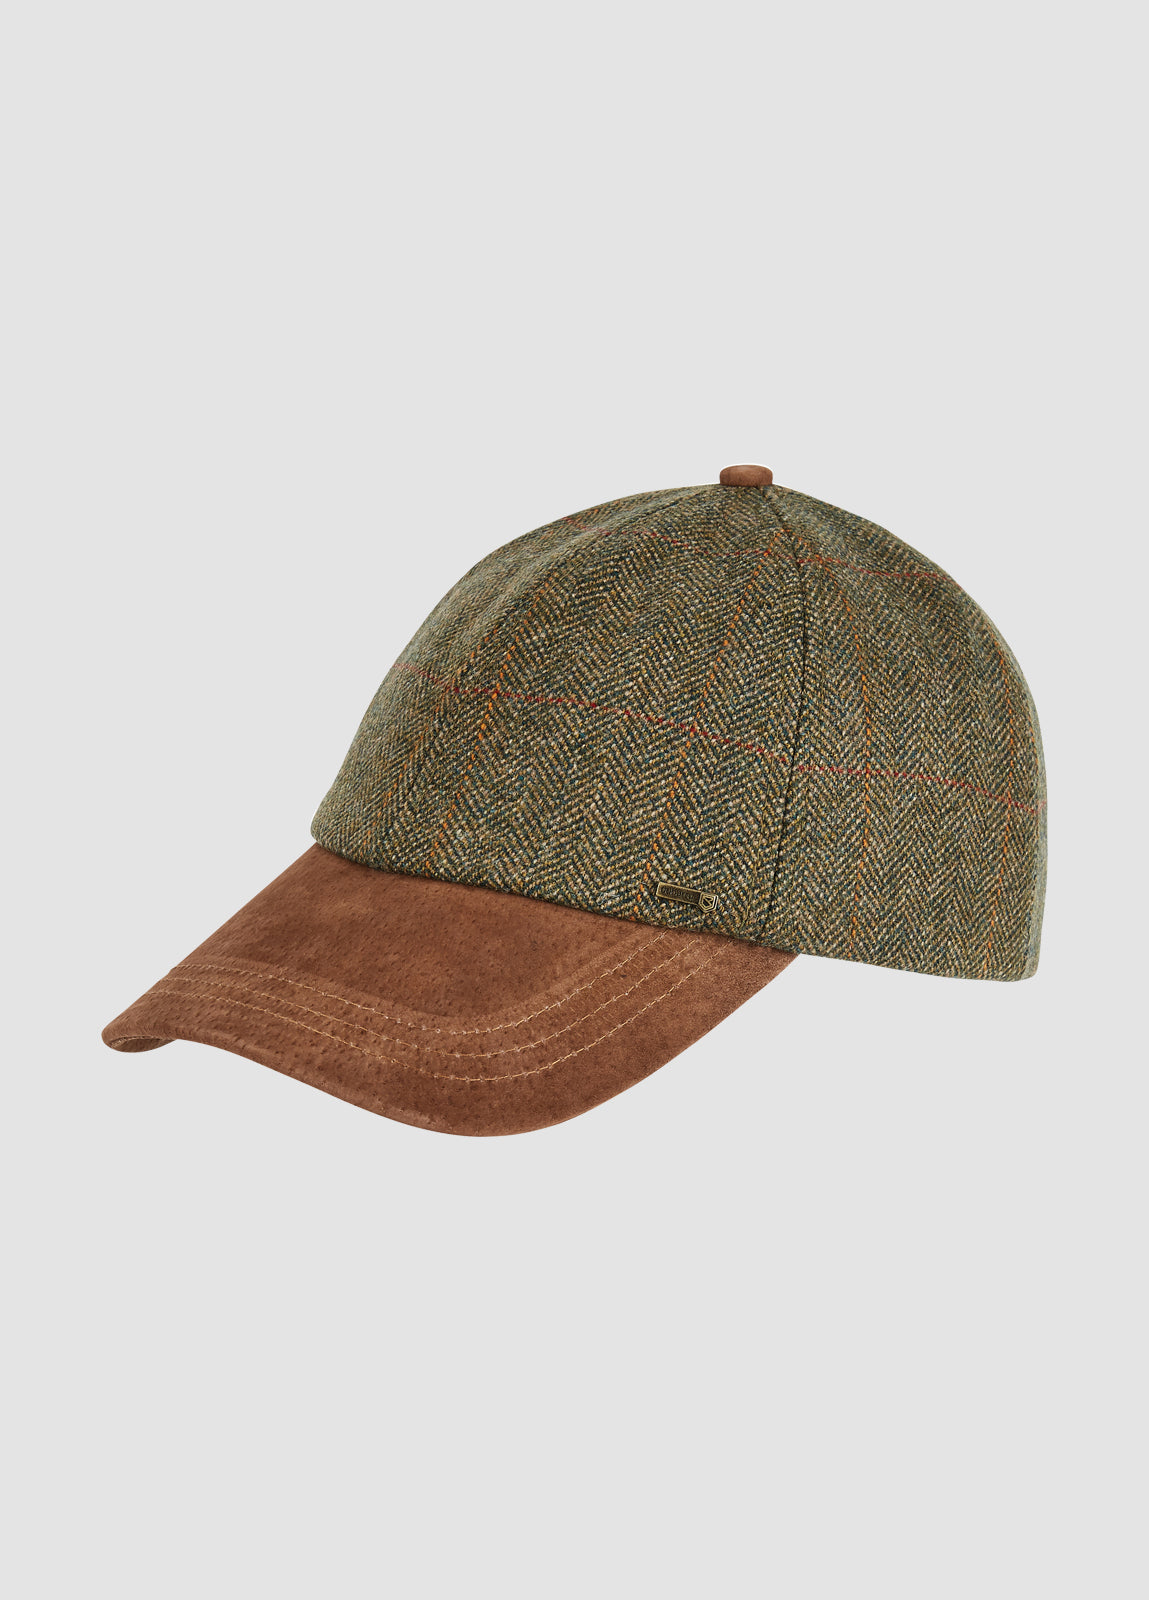 Dowd tweed cap